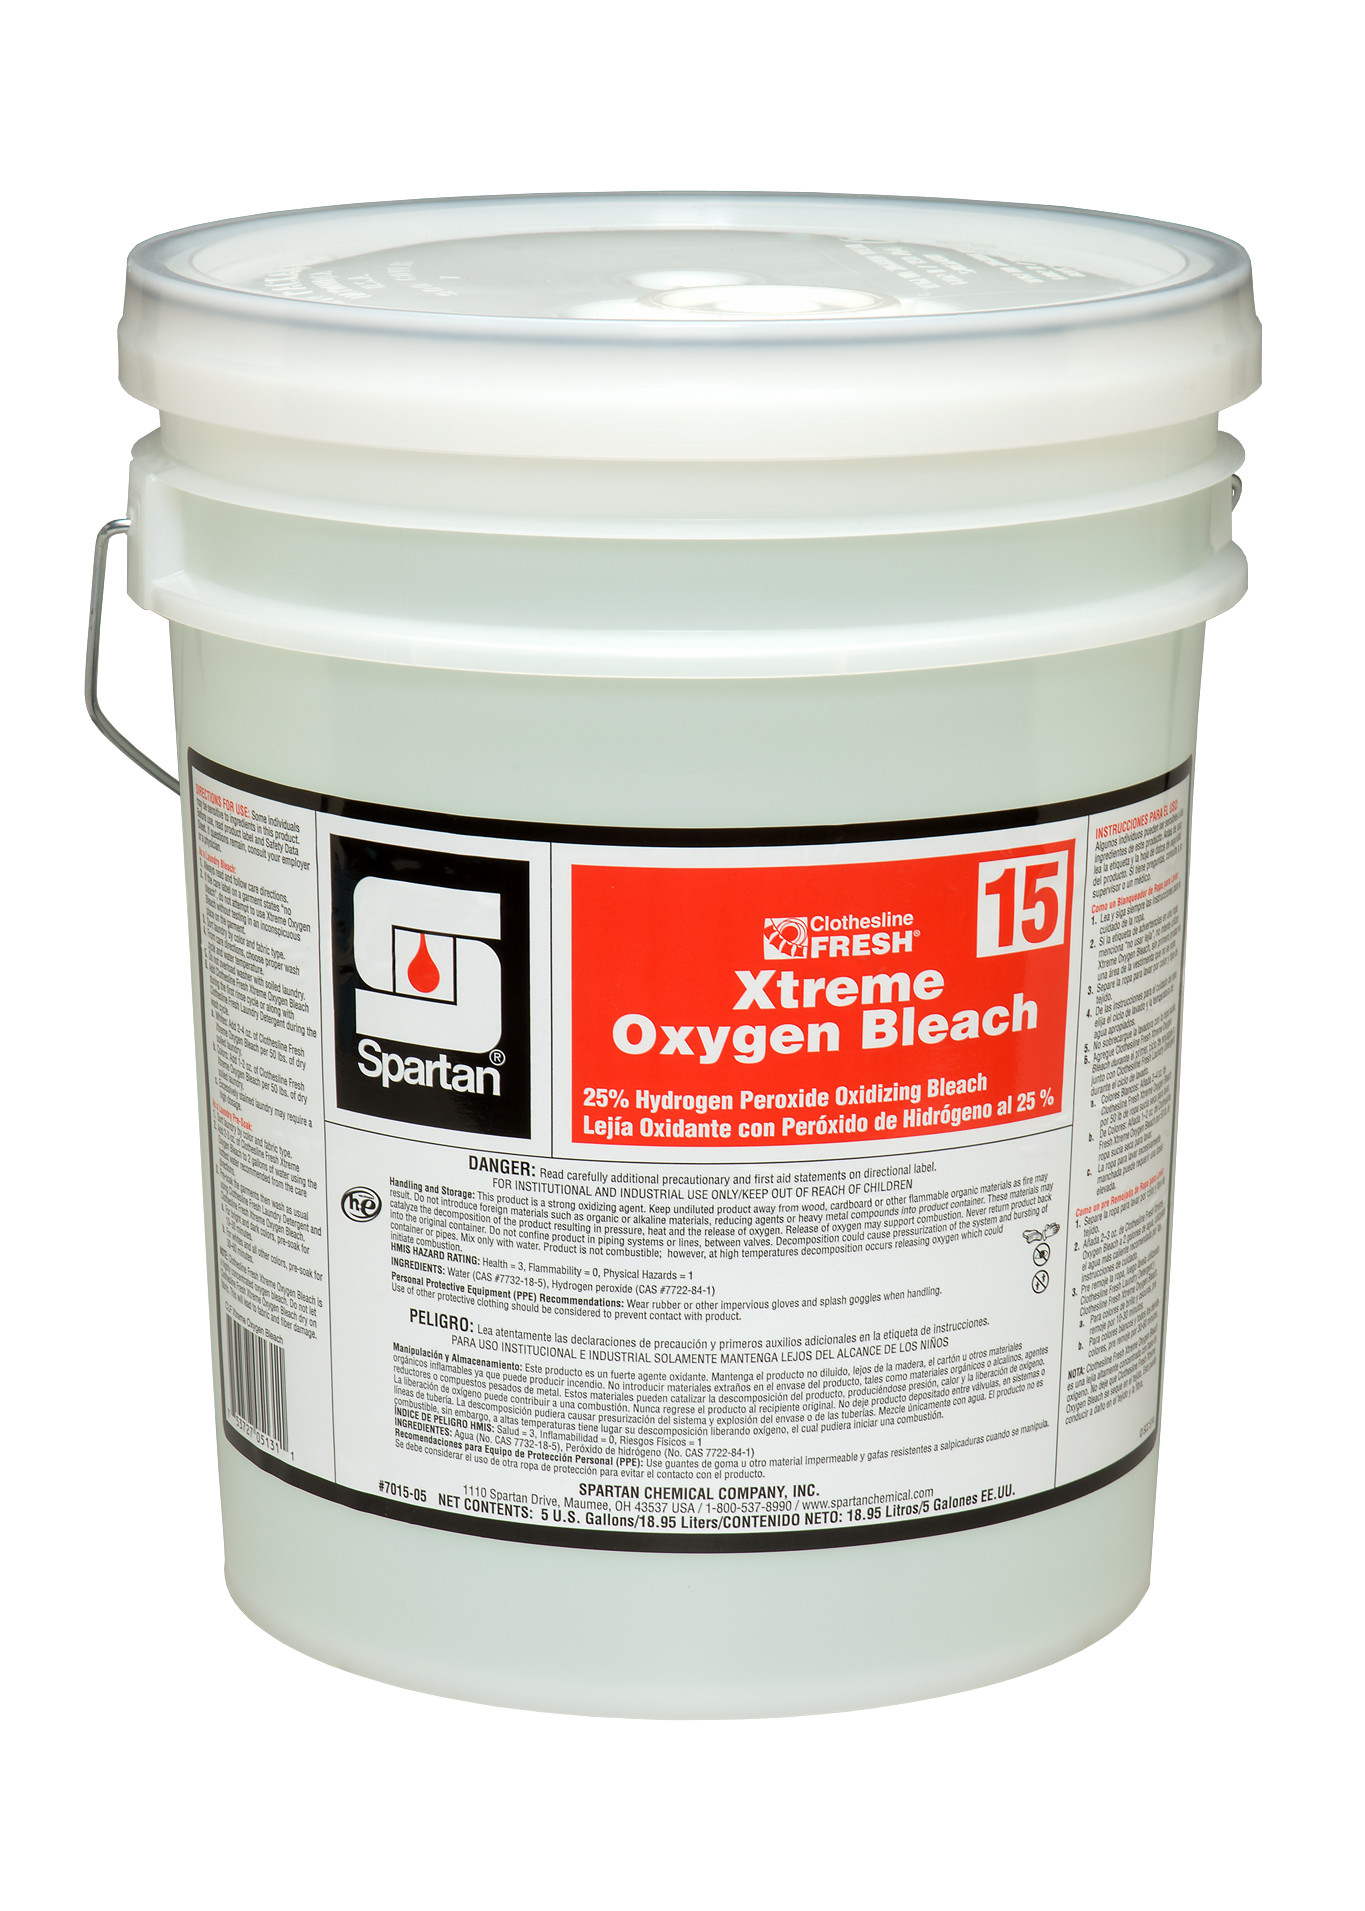 Spartan Chemical Company Clothesline Fresh Xtreme Oxygen Bleach 15, 5 GAL PAIL